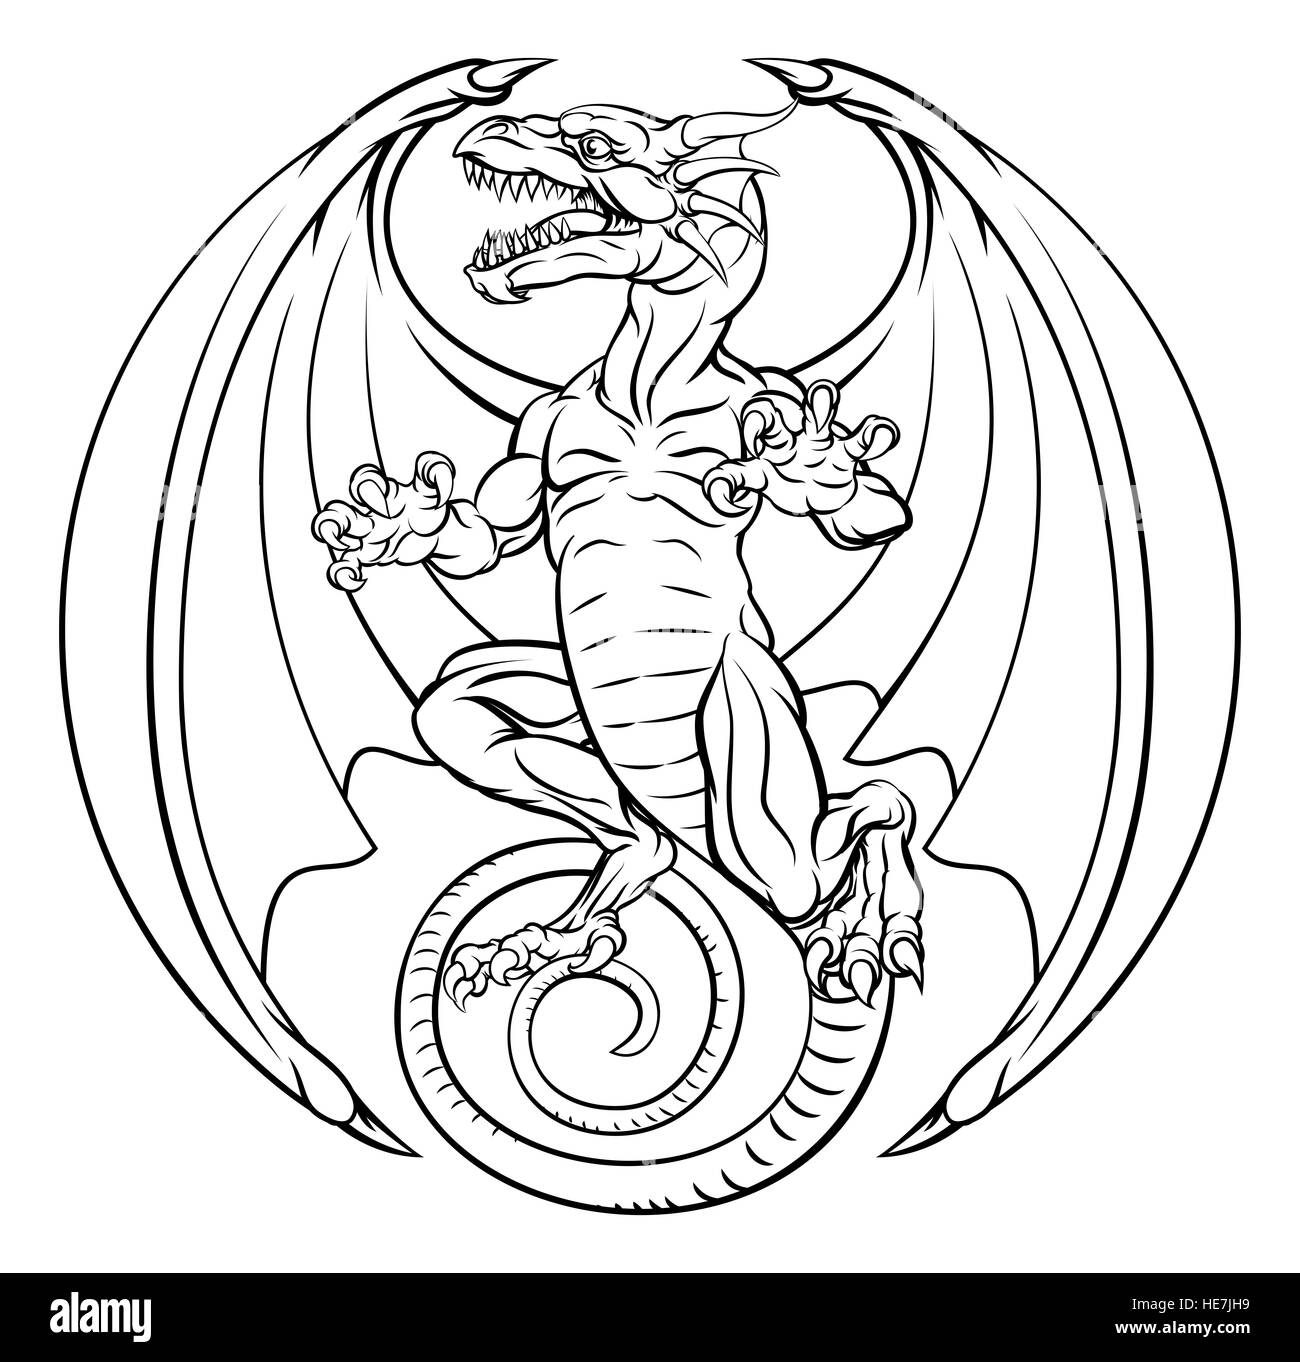 A tattoo dragon illustration design in a circle shape Stock Photo